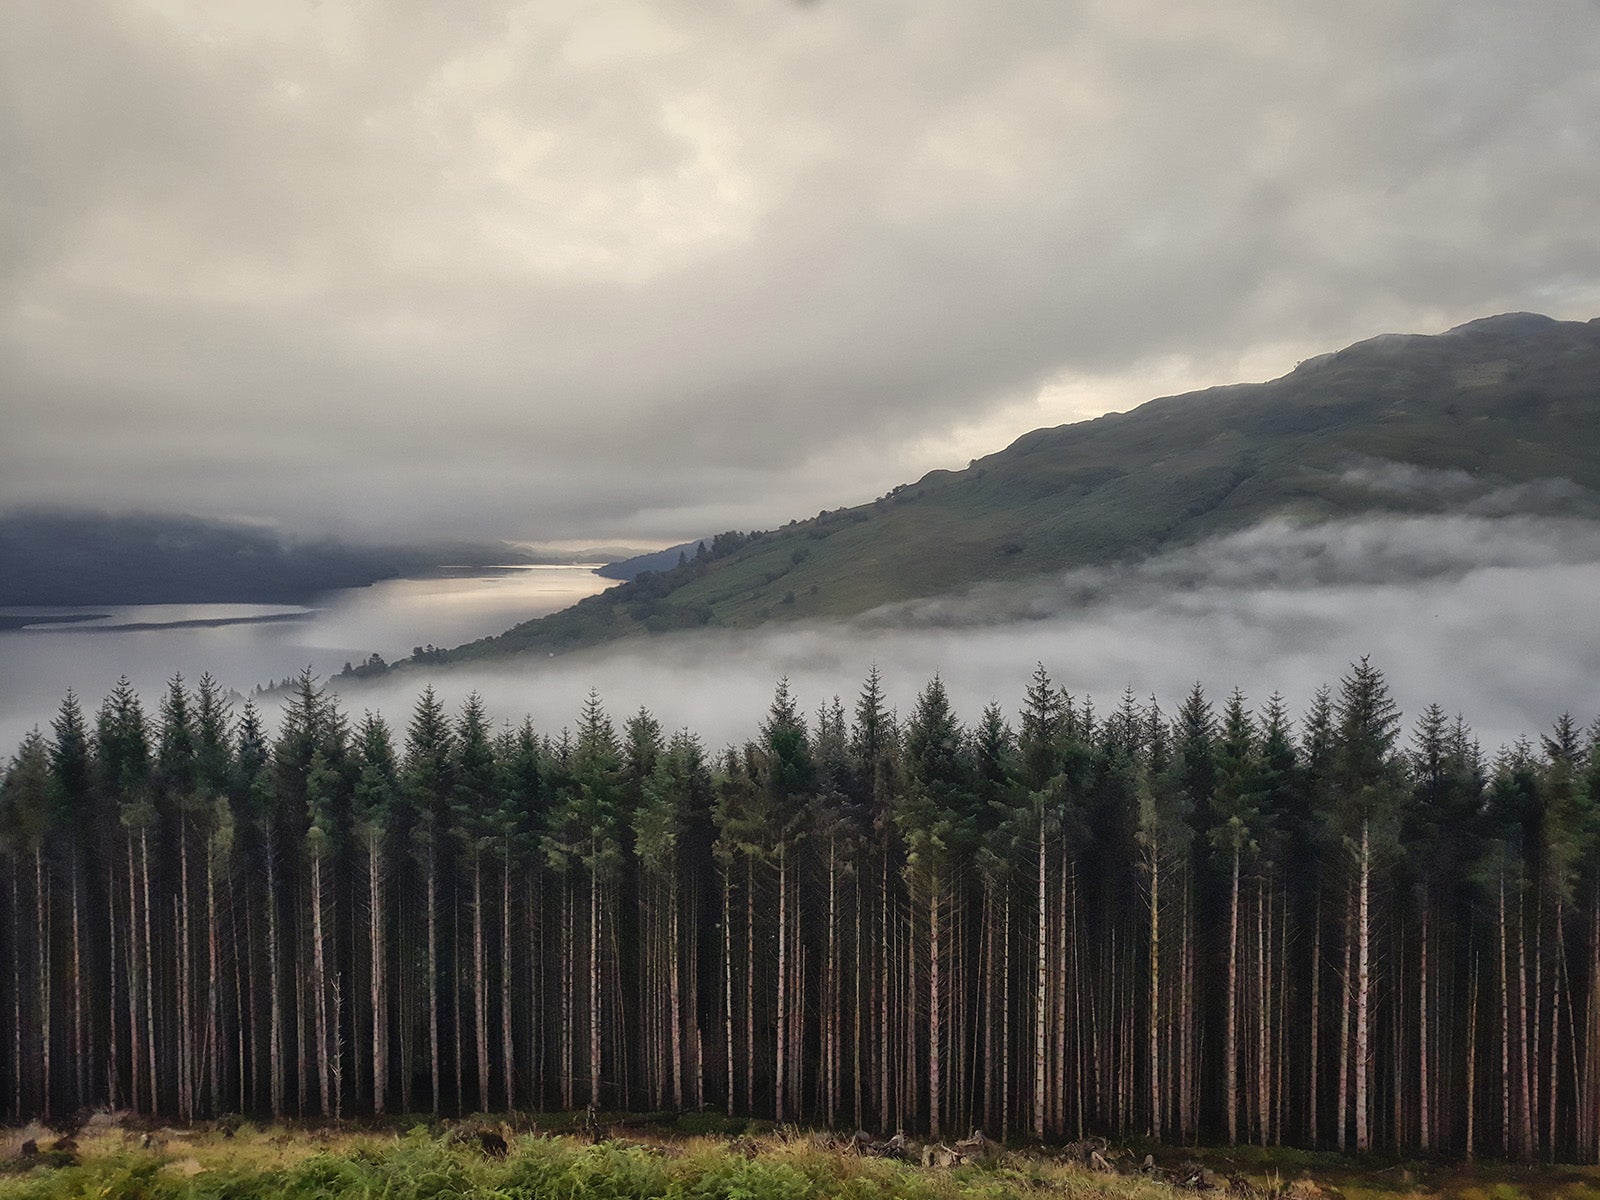 rmets weather photographer of the year Tarbet, Loch Lomond, Scotland